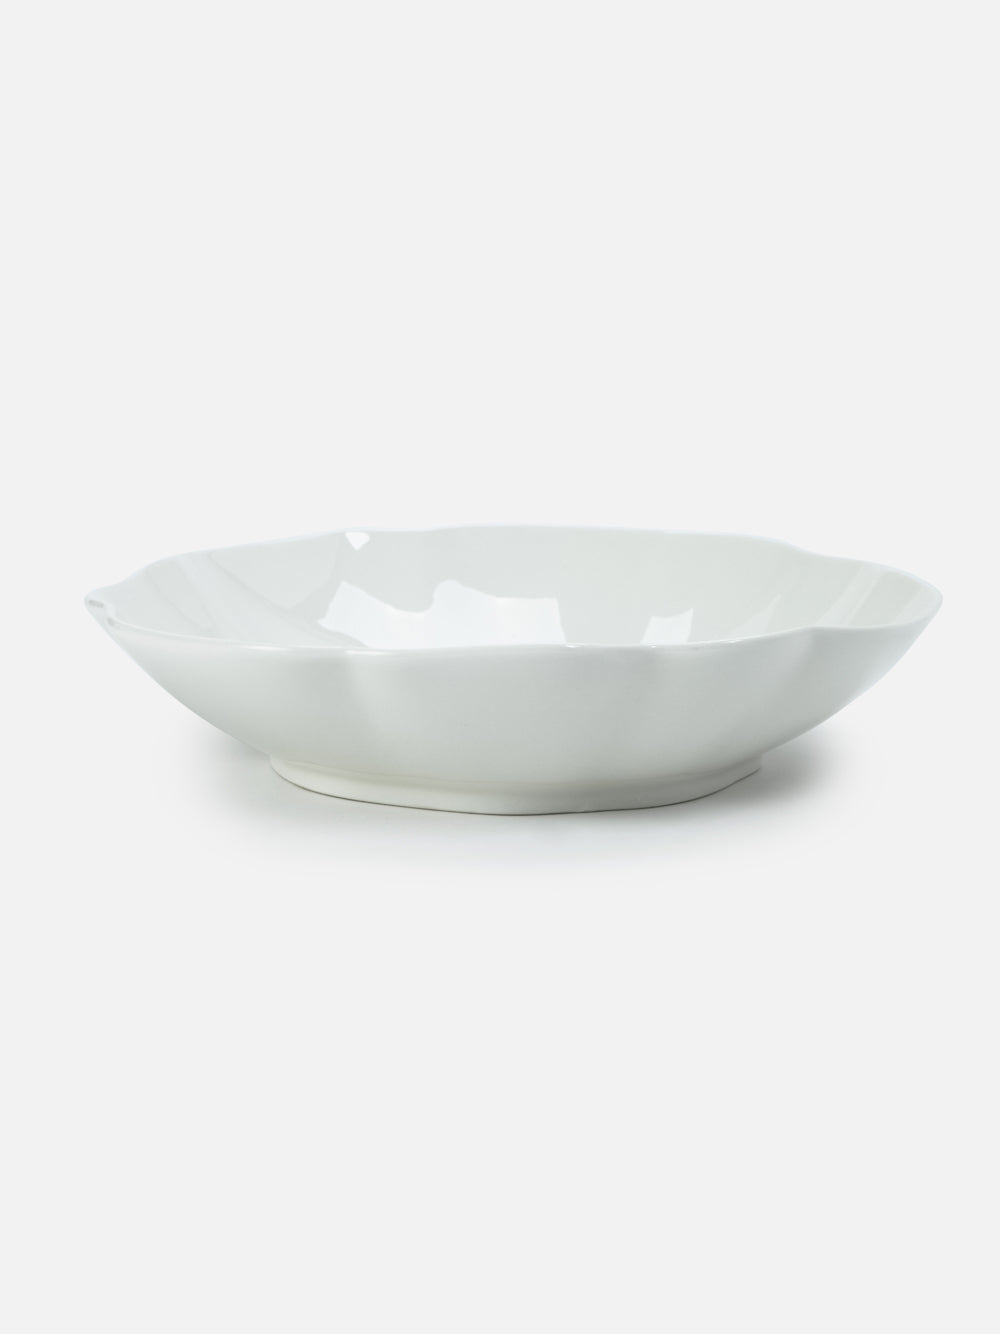 Jewel Ceramic Serving Bowl